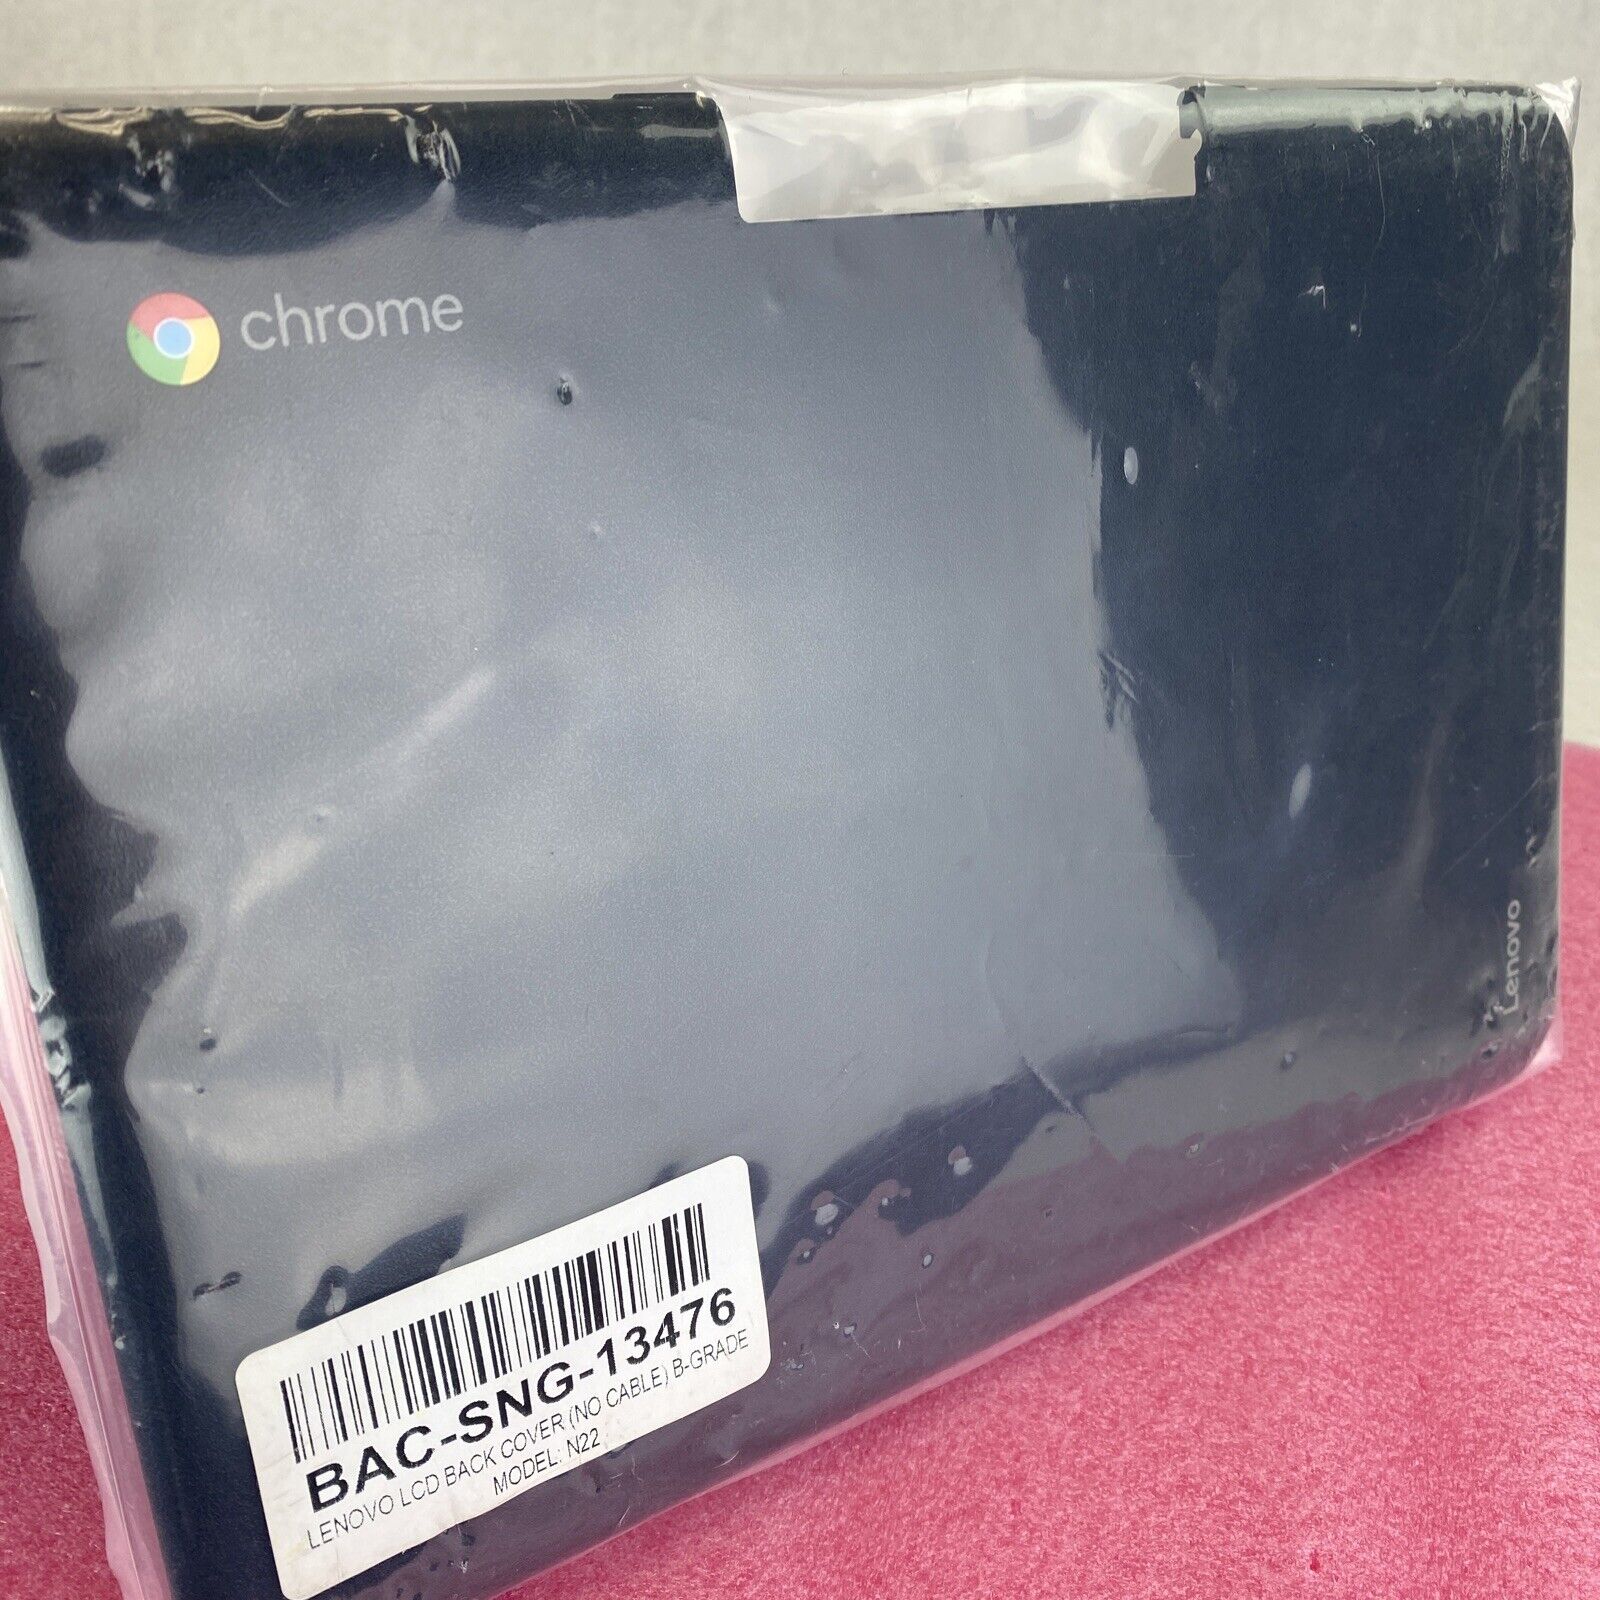 Lenovo BAC-SNG-13476 5CB0L13233 N22 Chromebook LCD Back Cover